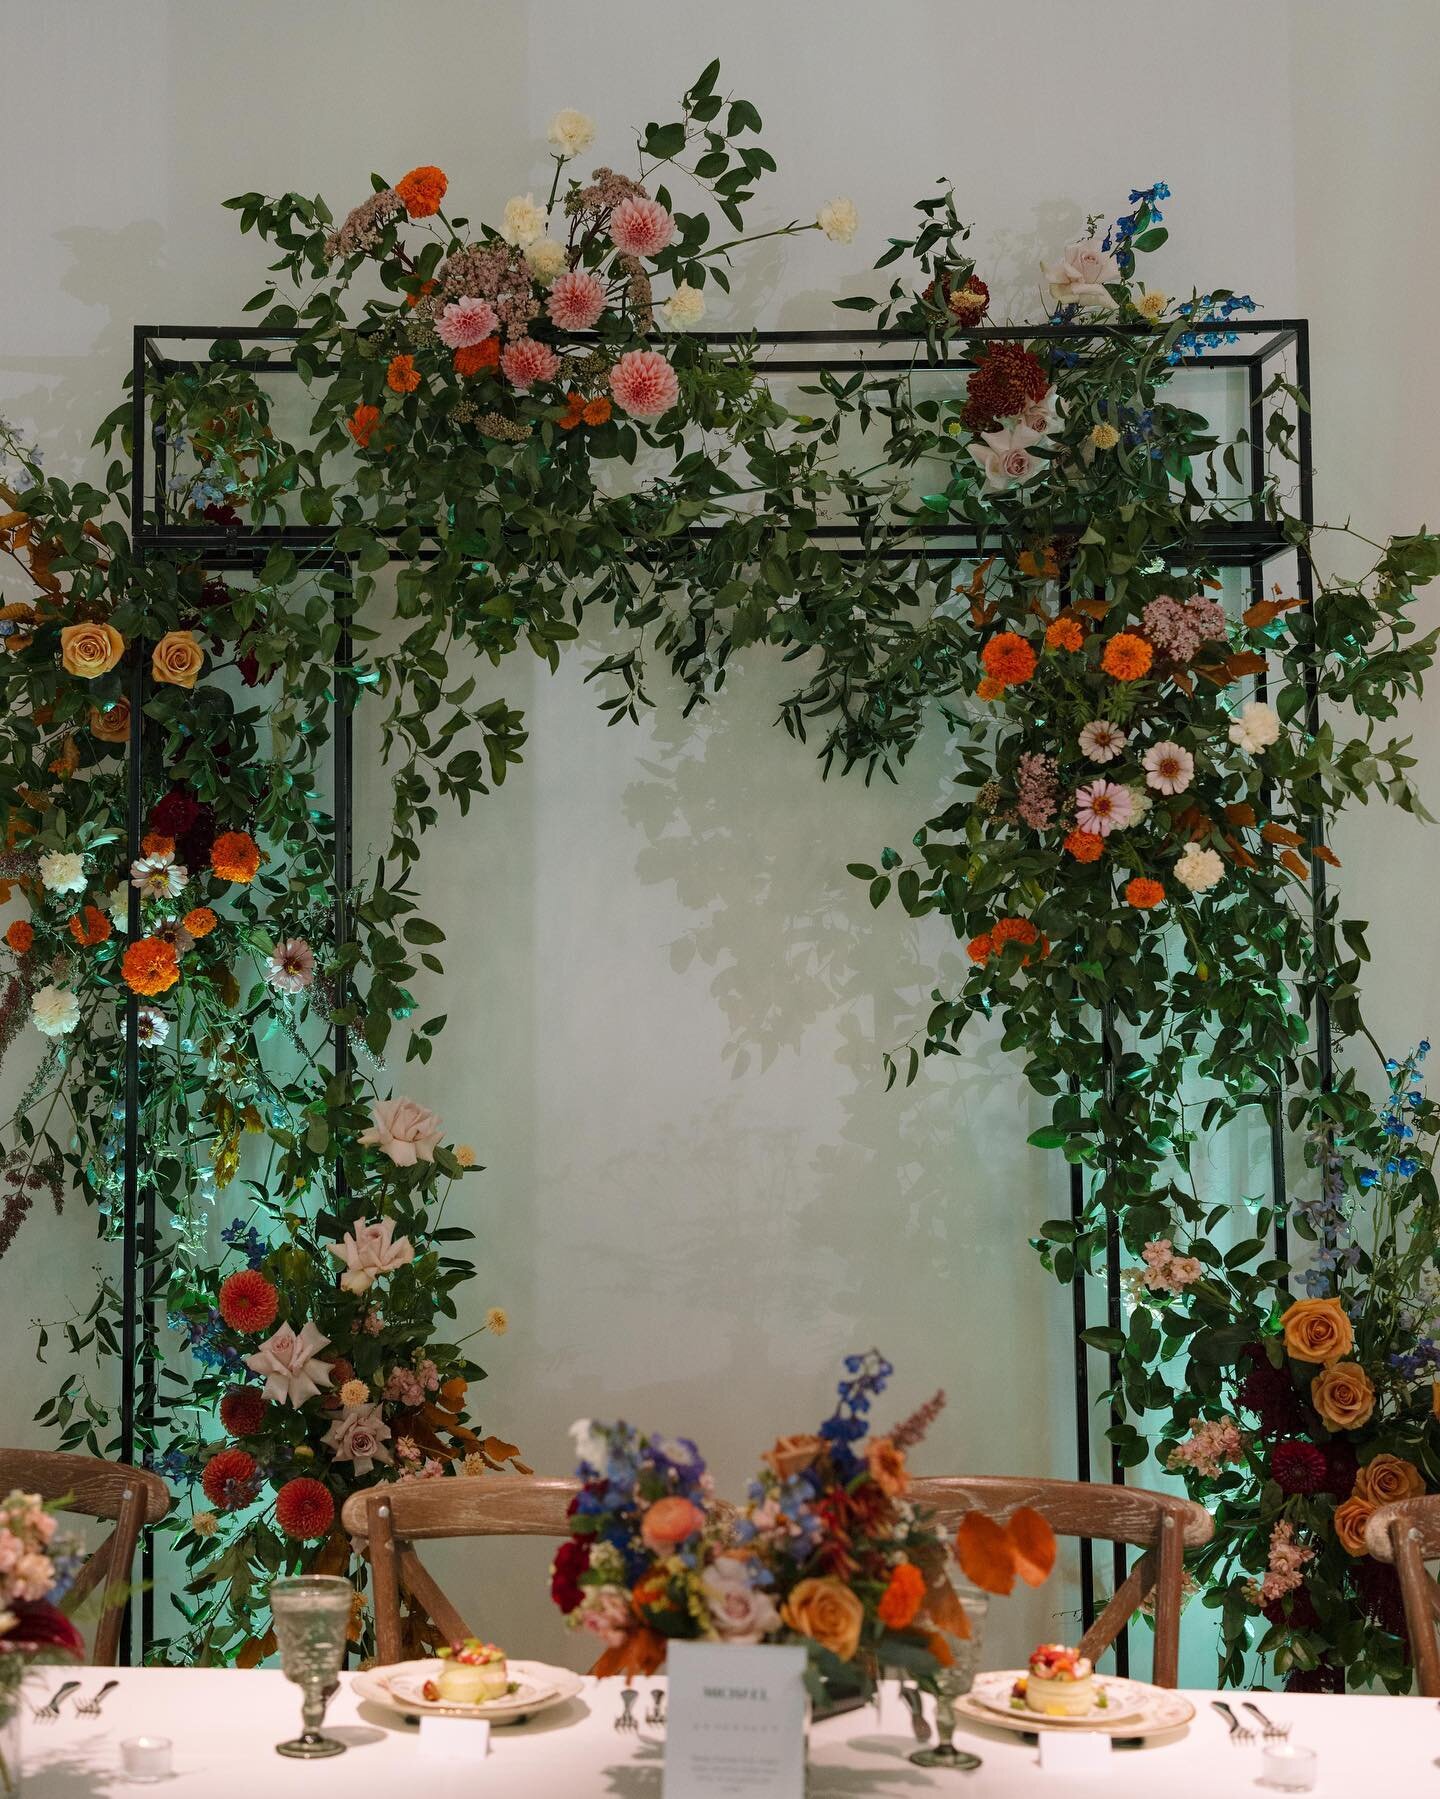 Beautiful arrangements from @palmerflowerweddings combined with up-lighting💐
.
.
.

Florals- @palmerflowerweddings 
Photo- @thedelacastros 
Planner- @mountain.magnolia.events 
Catering- @juliyjuanskitchen 
Venue- @ristcanyoninn 
.
.
.

#weddingflowe